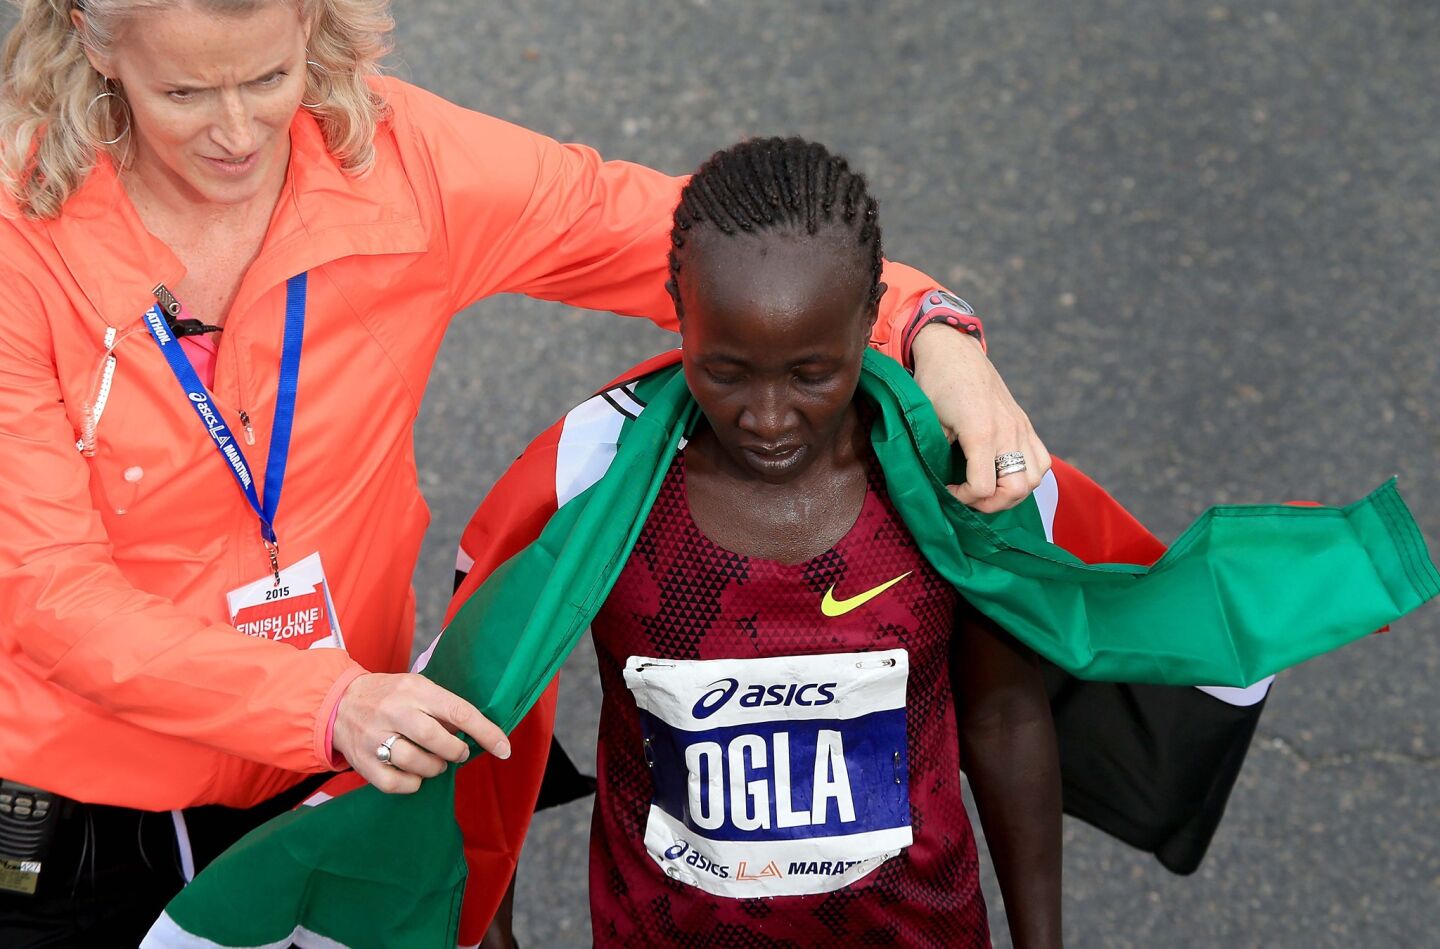 SANTA MONICA, CALIF. - MAR. 15, 2015. Ogla Kimayao of Kenya wins the women's elite division of the 30th Los Angeles Marathon on Sunday, Mar. 15, 2015. (Luis Sinco/Los Angeles Times)